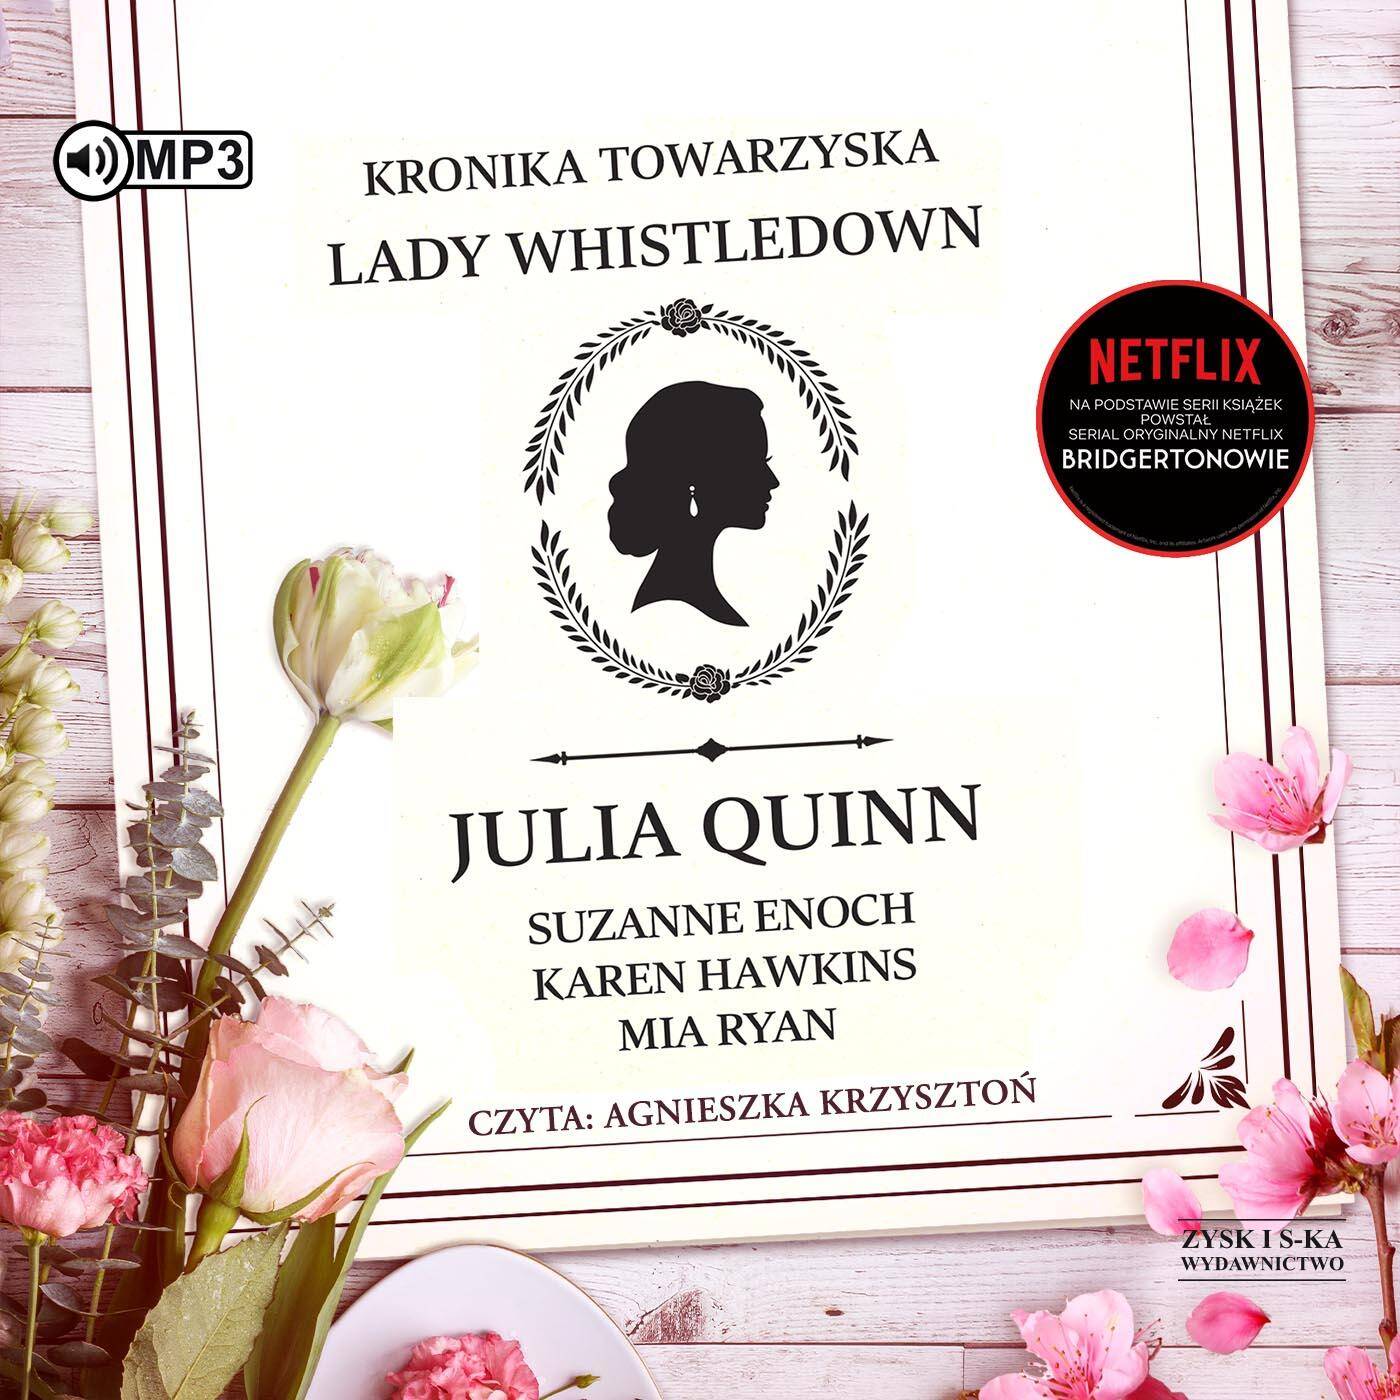 CD MP3 Kronika towarzyska lady Whistledown